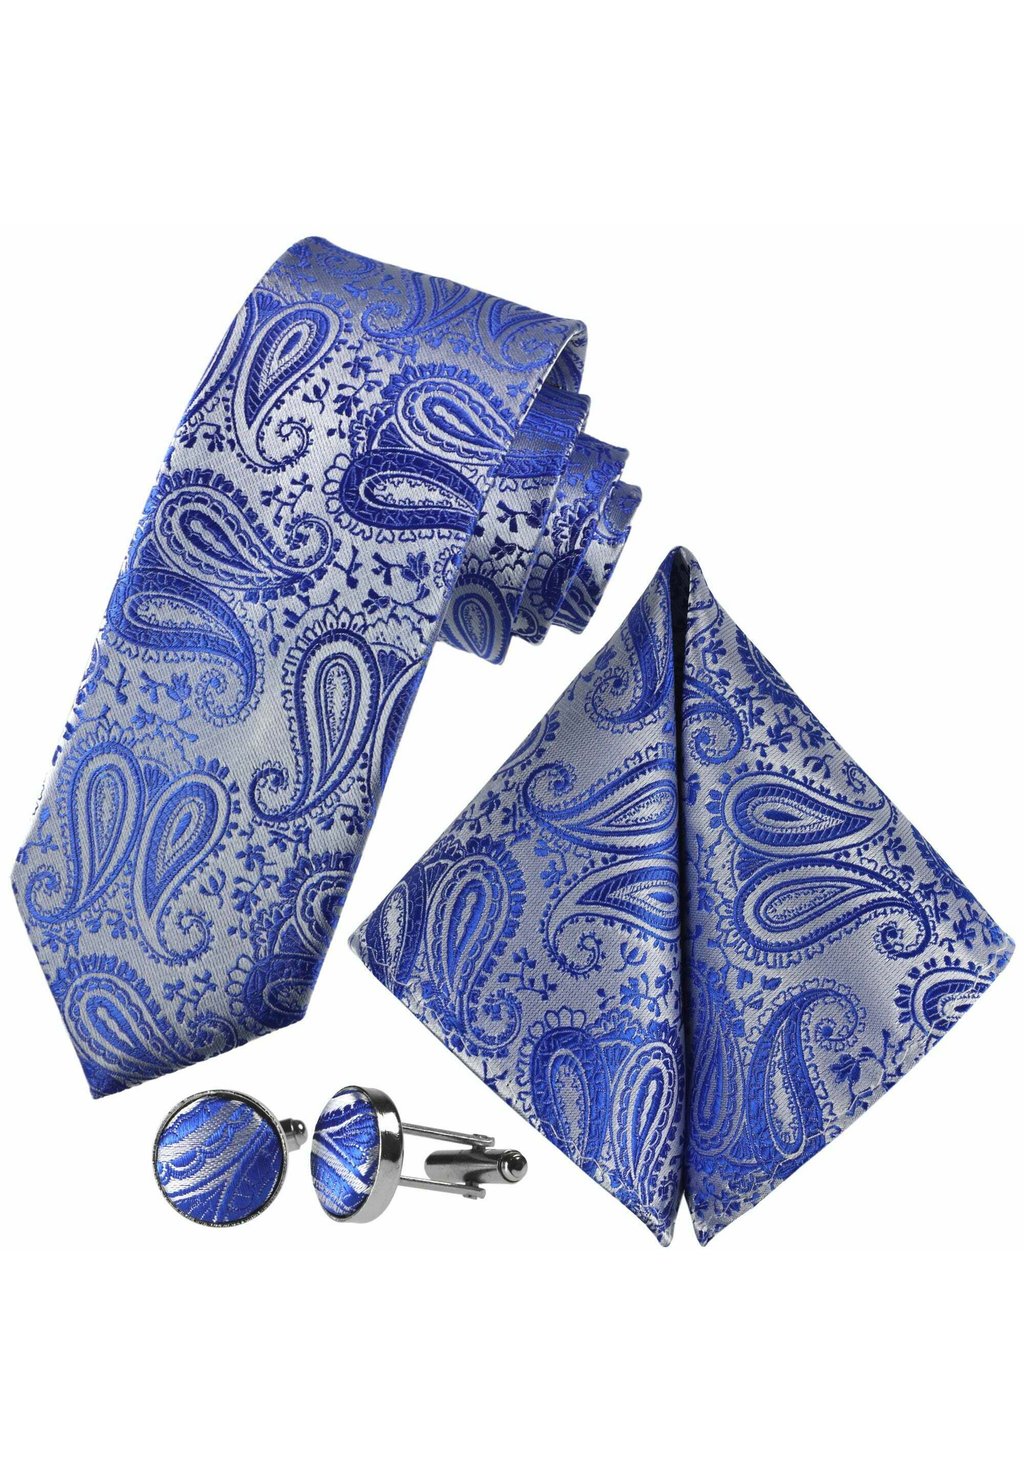 Нагрудный платок 3-SET Gassani, цвет ultramarin-blau silber-grau royal-blau hell-grau